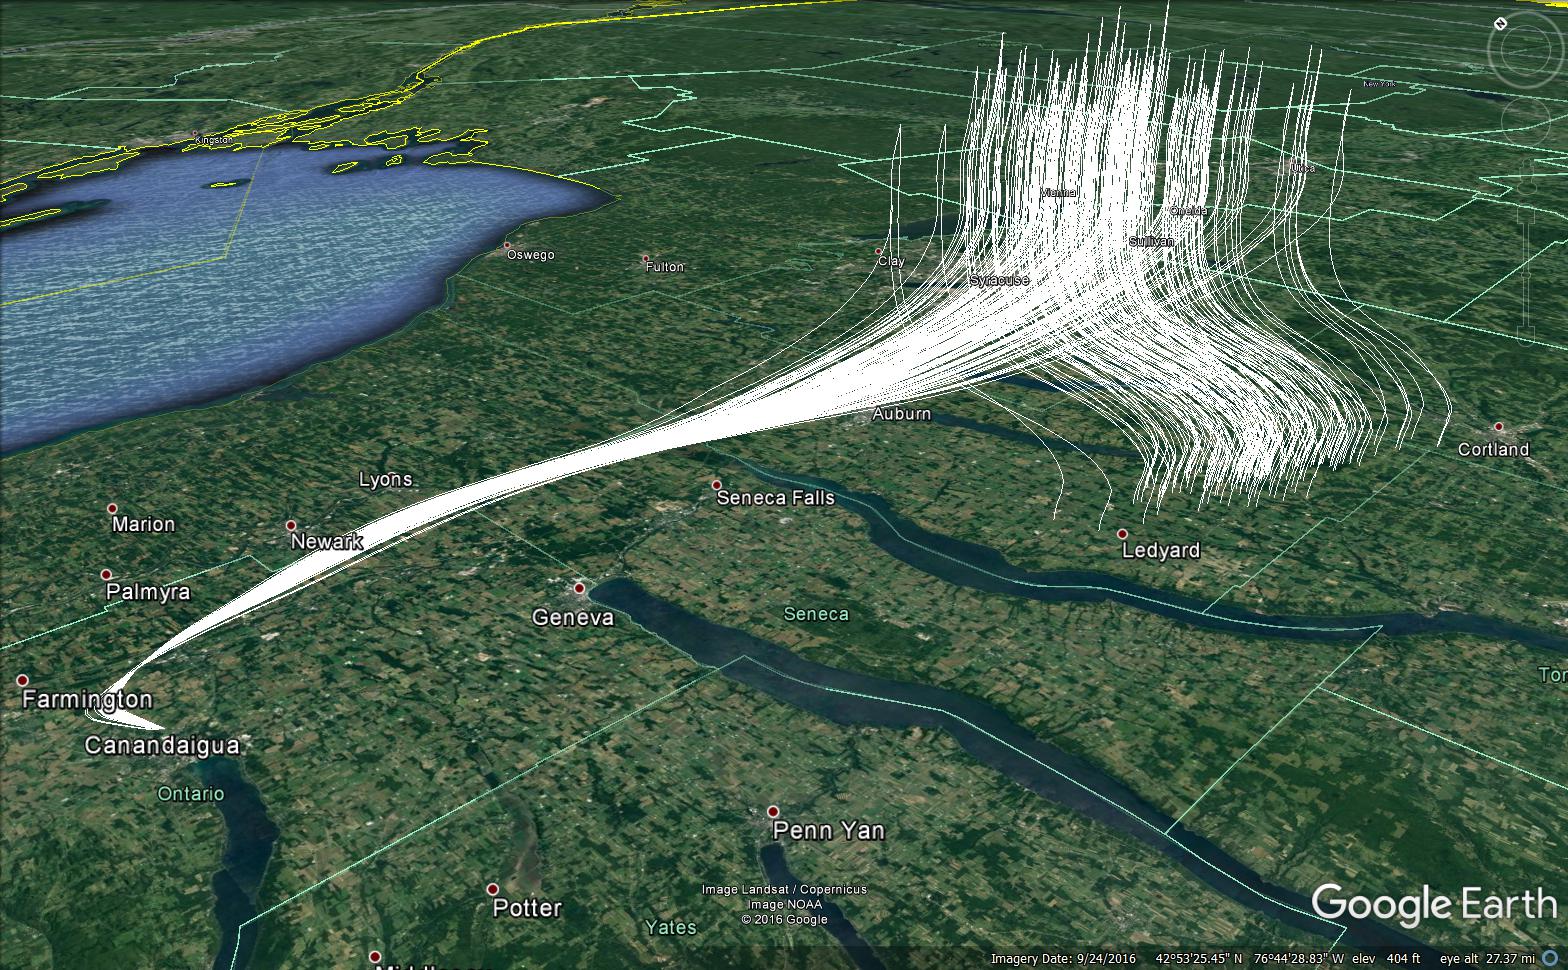 OLHZN-6 3D Predicted Flight Path - 800g Balloon